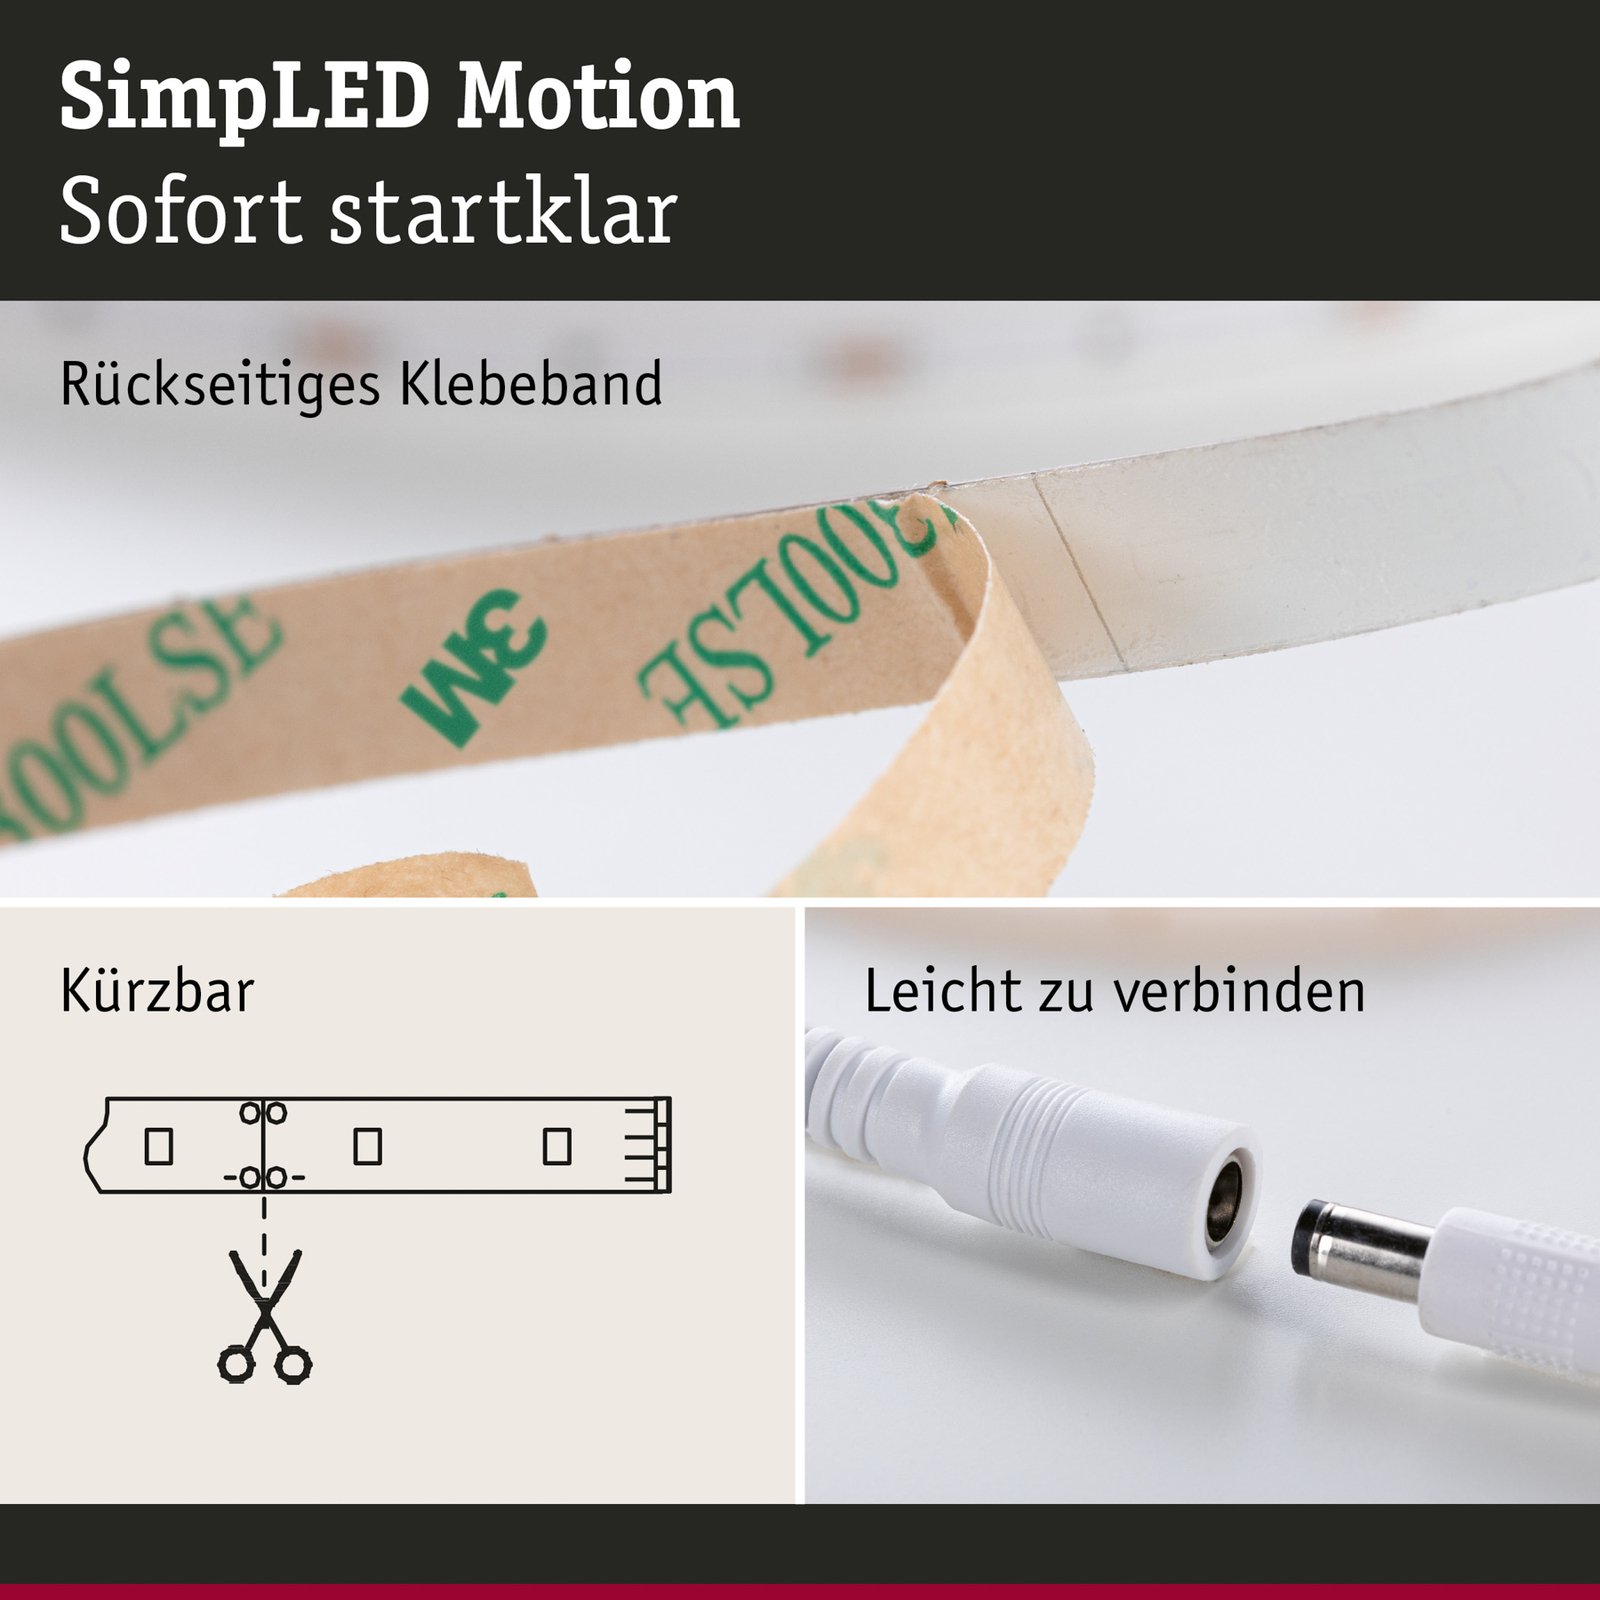 Комплект LED ленти Paulmann SimpLED Motion, 5 м дистанционно управление RGB